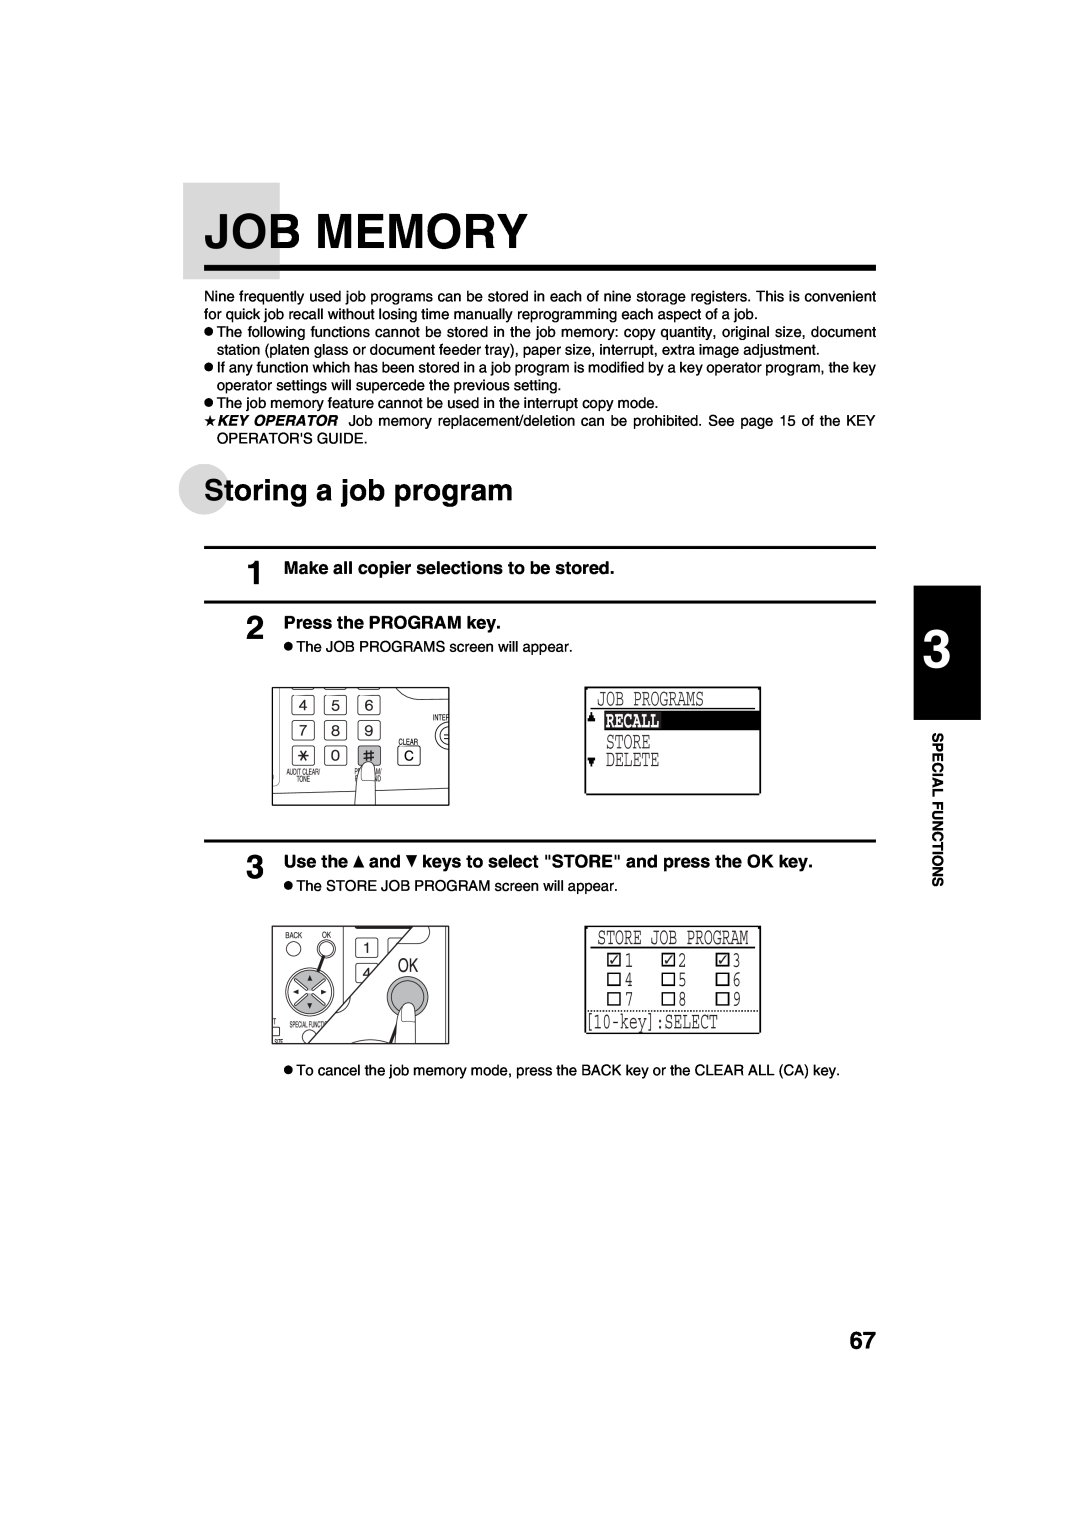 Sharp AR-M208 Job Memory, Storing a job program, Recall, Delete, Store Job Program, keySELECT, Press the PROGRAM key 